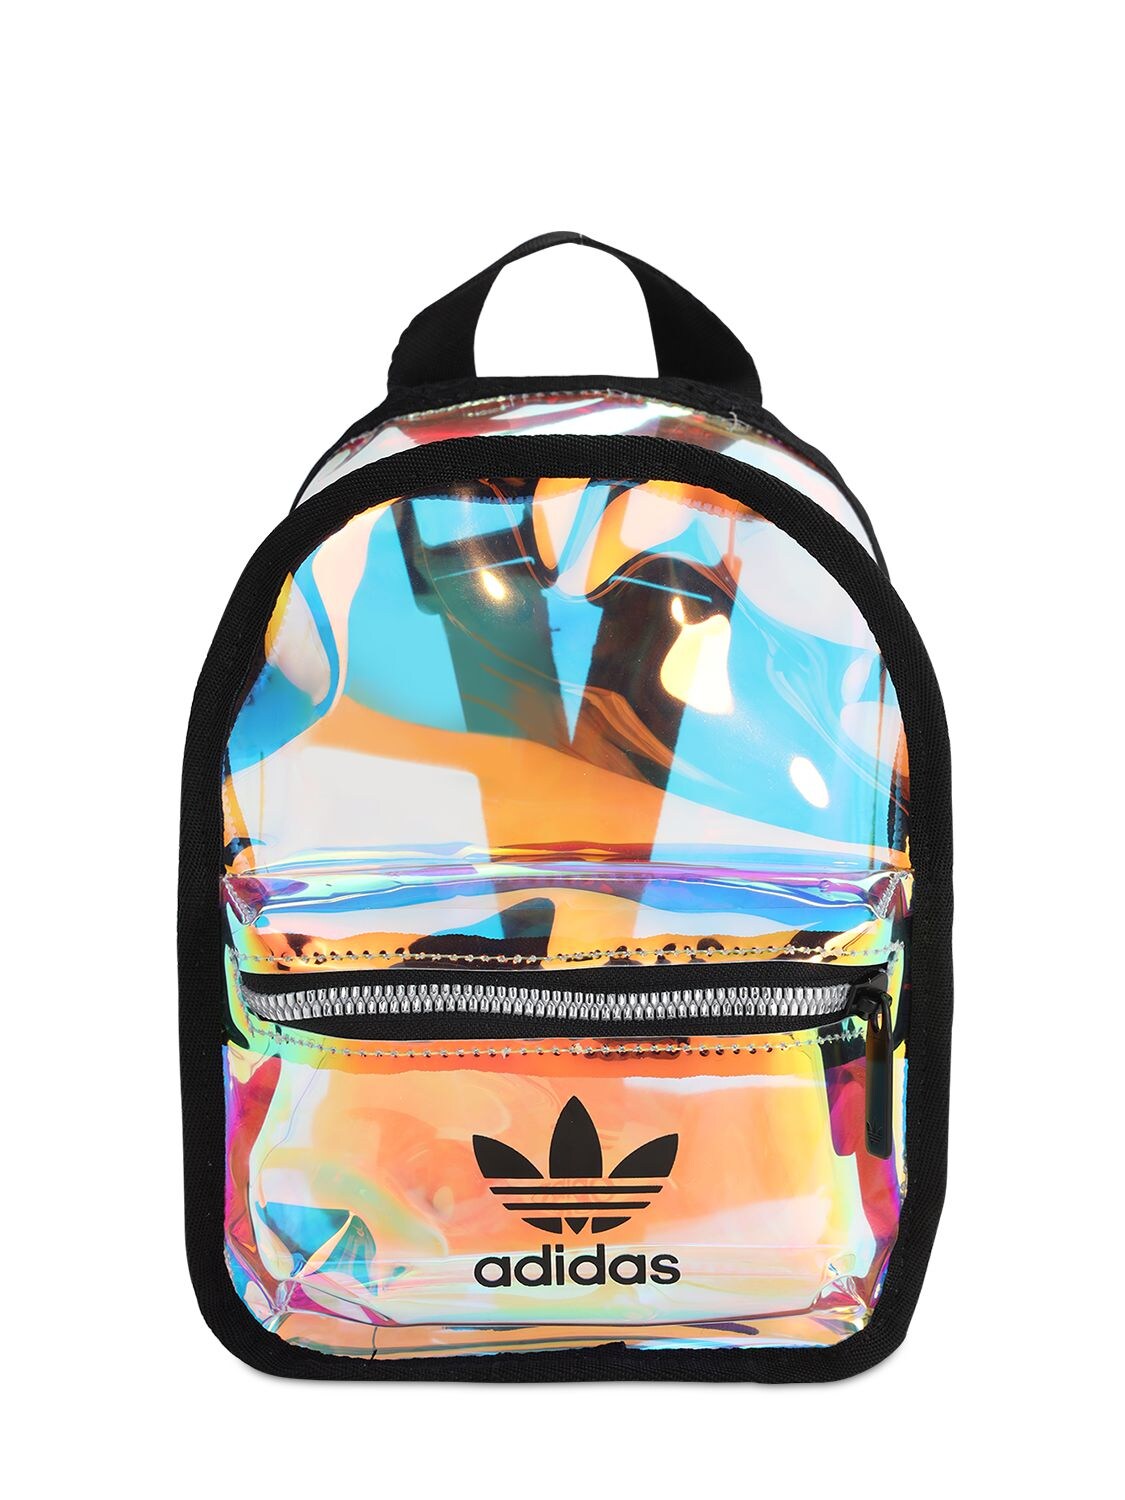 adidas mini iridescent backpack